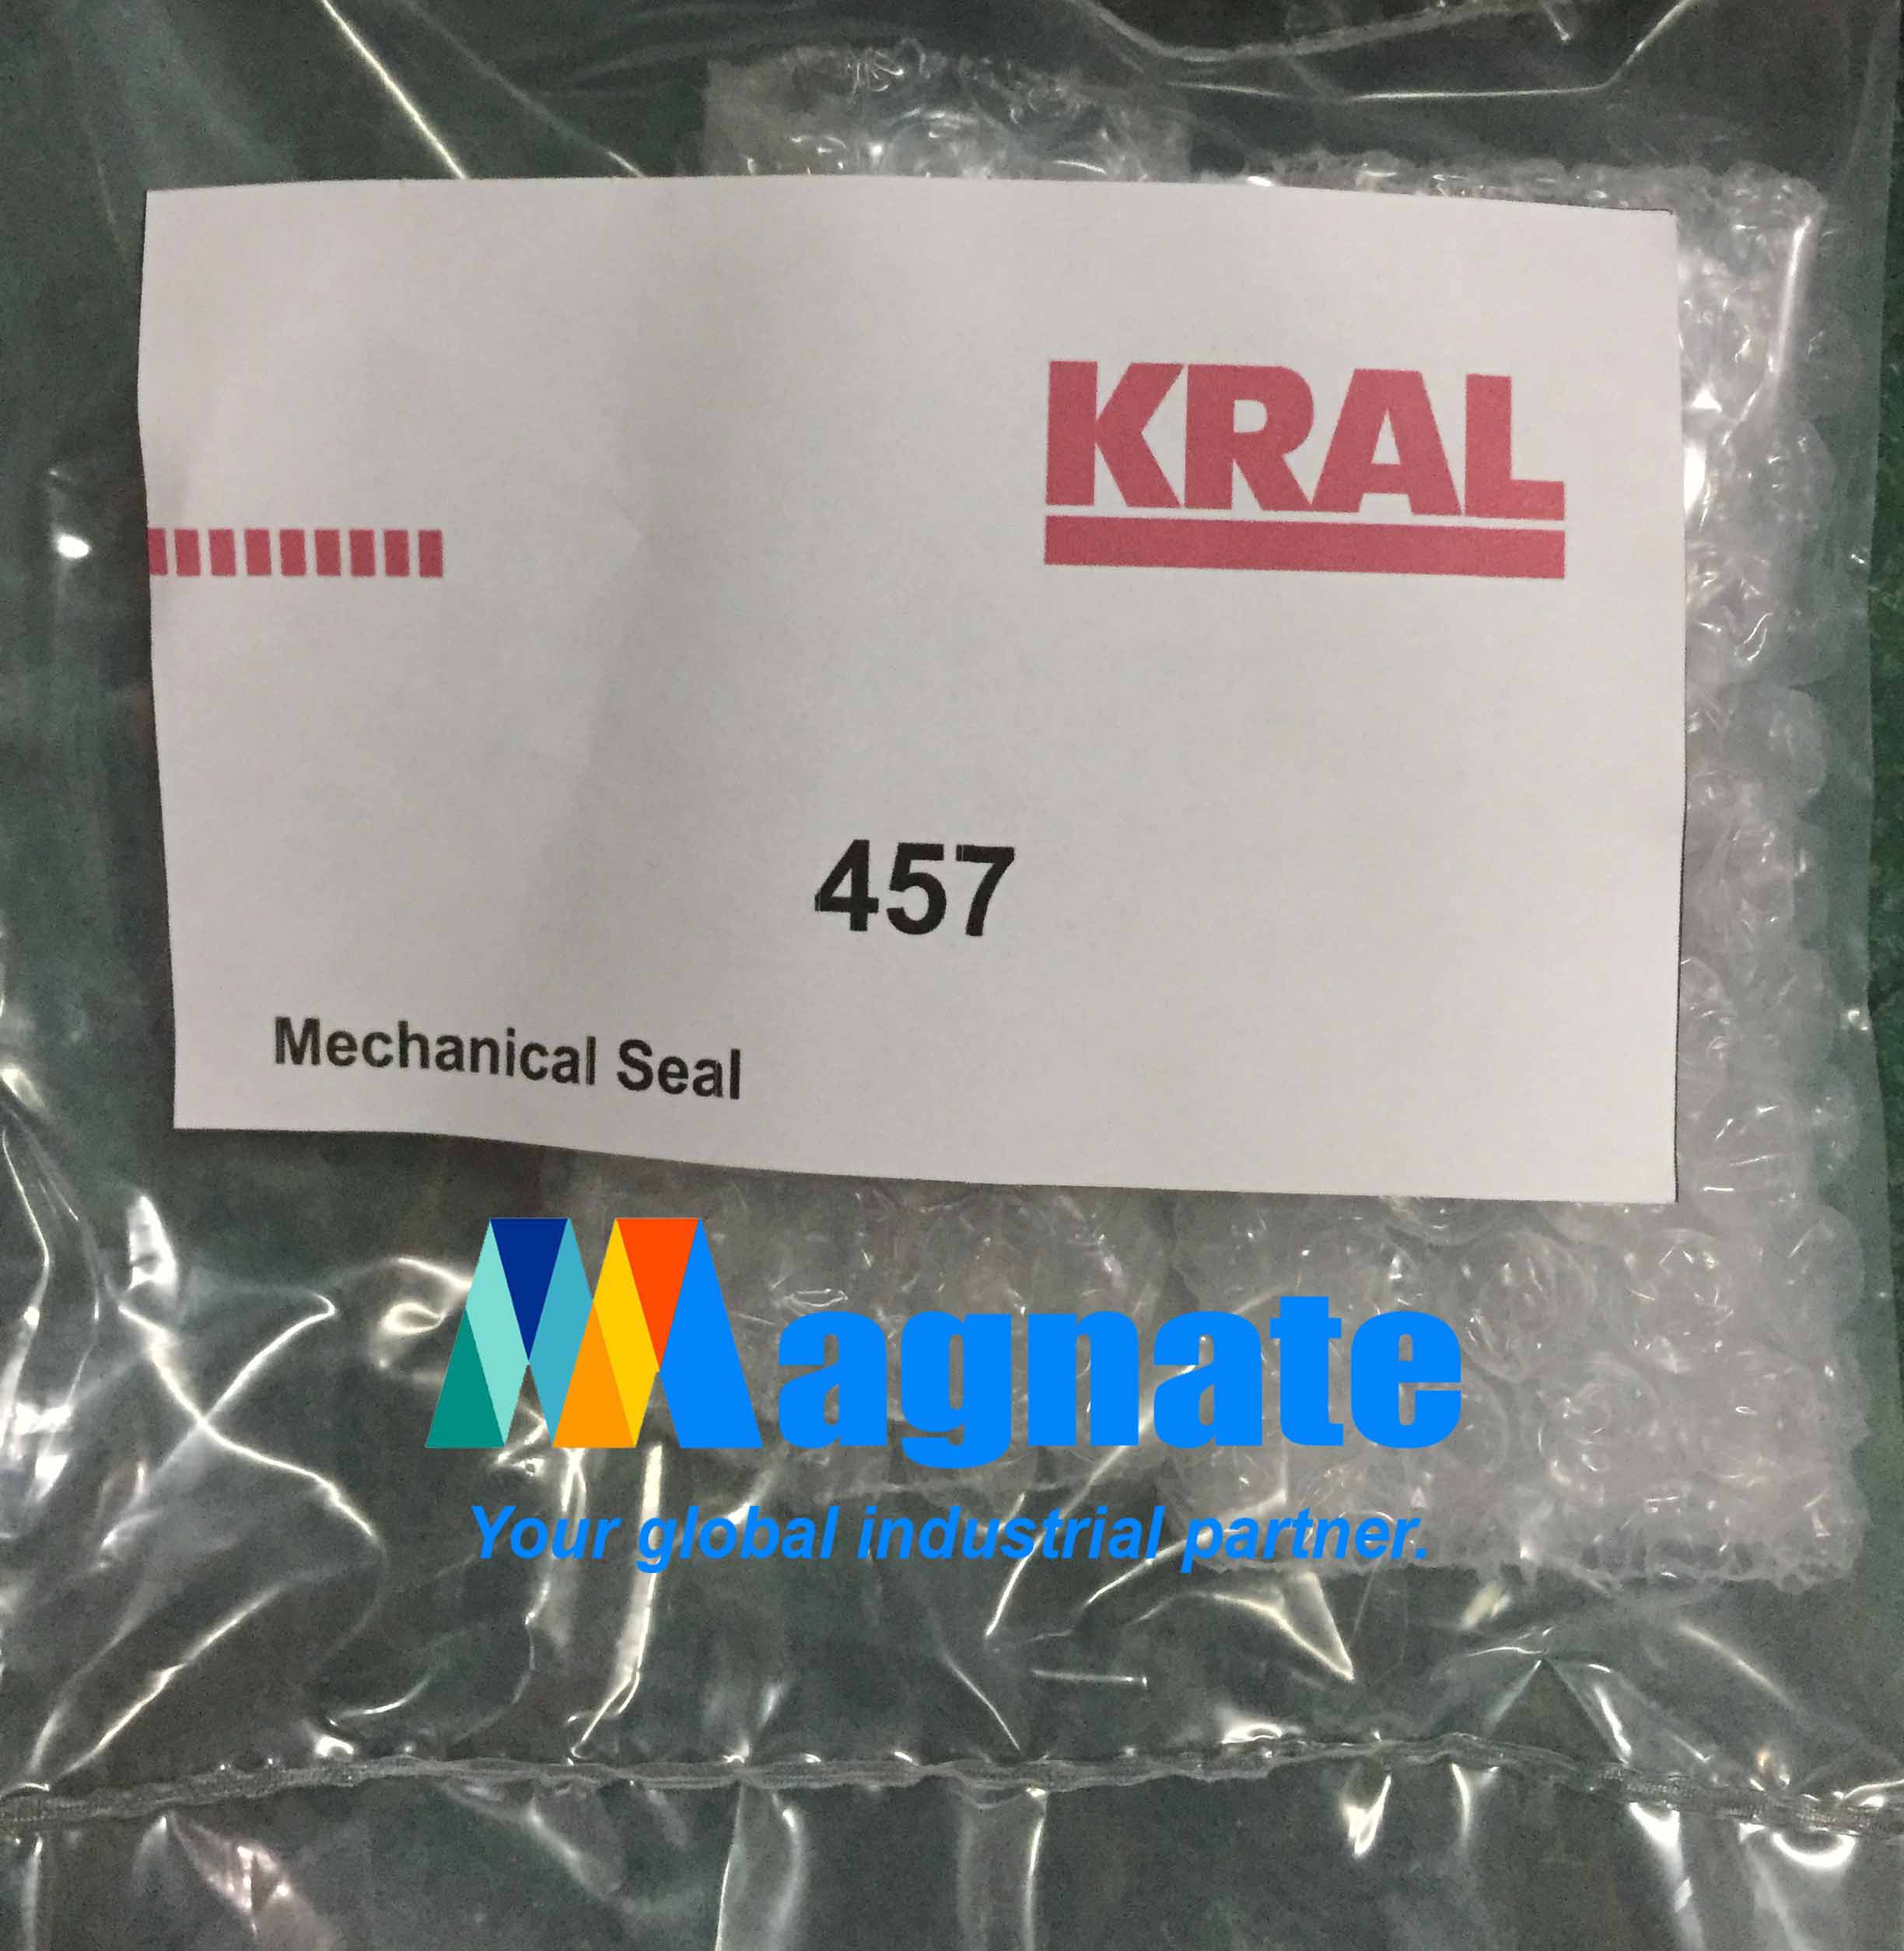  Kral Mechanical Seal  457